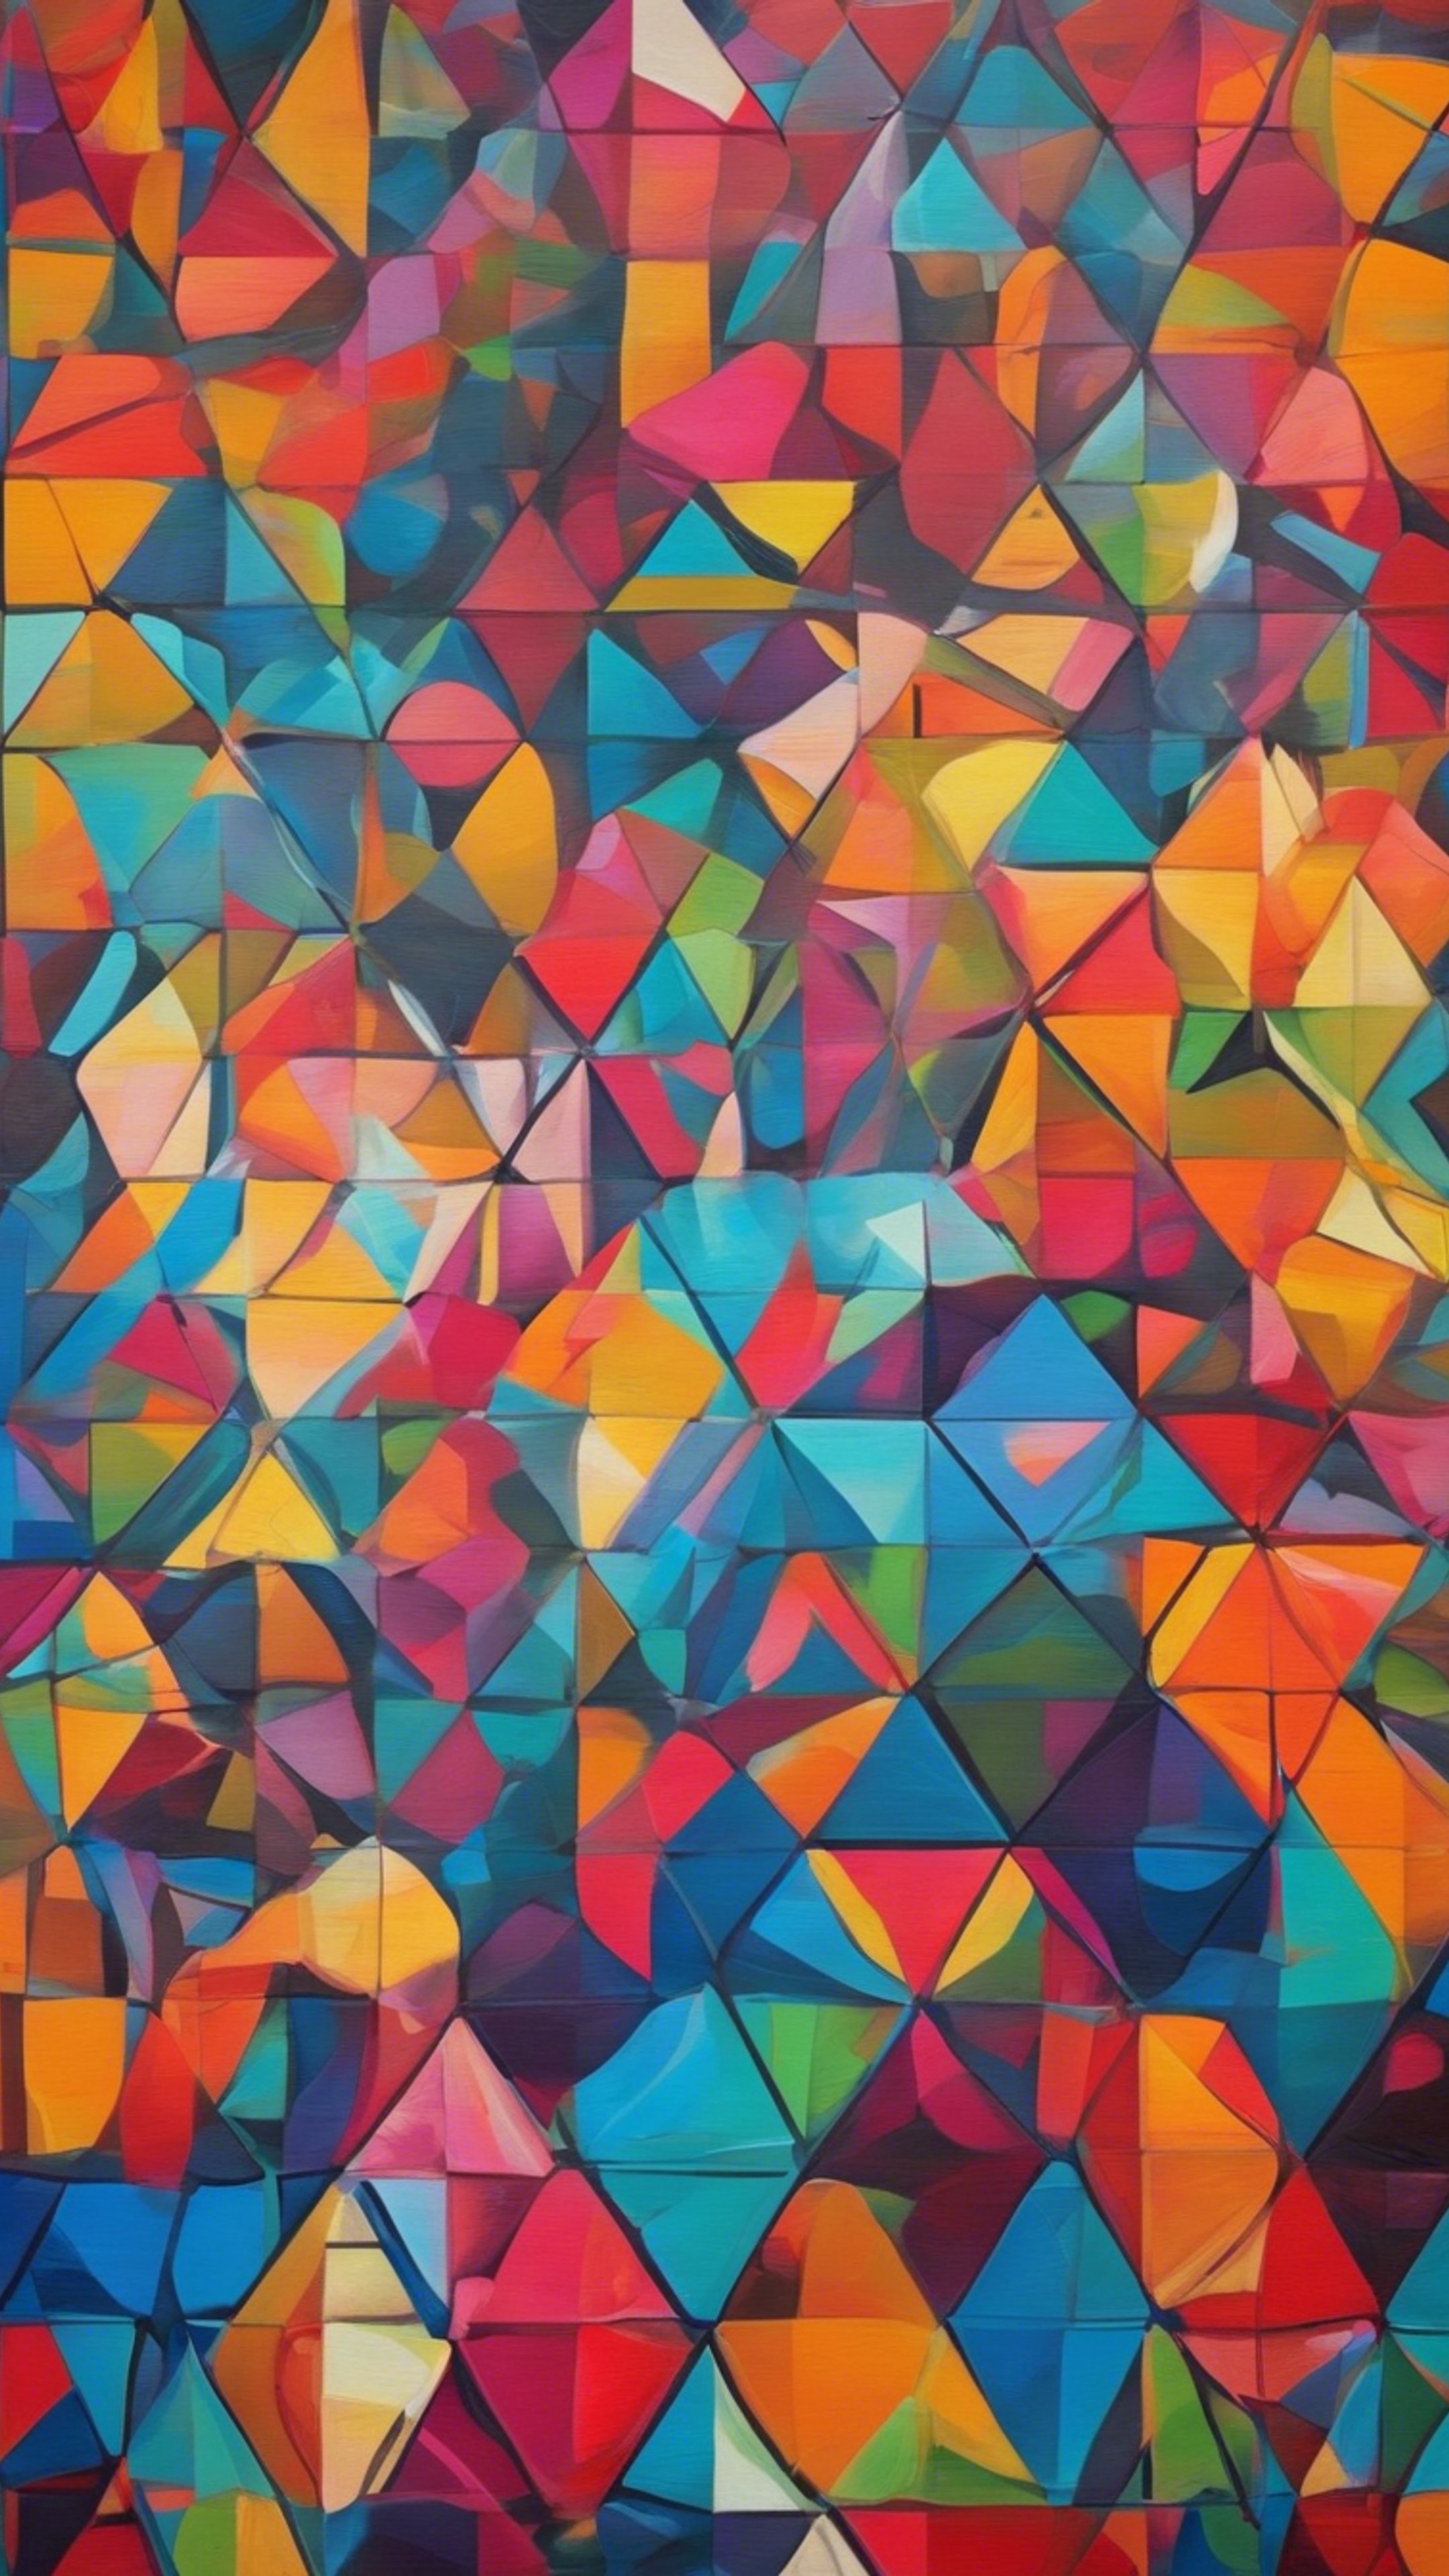 A modern art painting featuring geometric shapes in bold, vivid colors. Wallpaper[4f1b34f56f12448f9c2e]